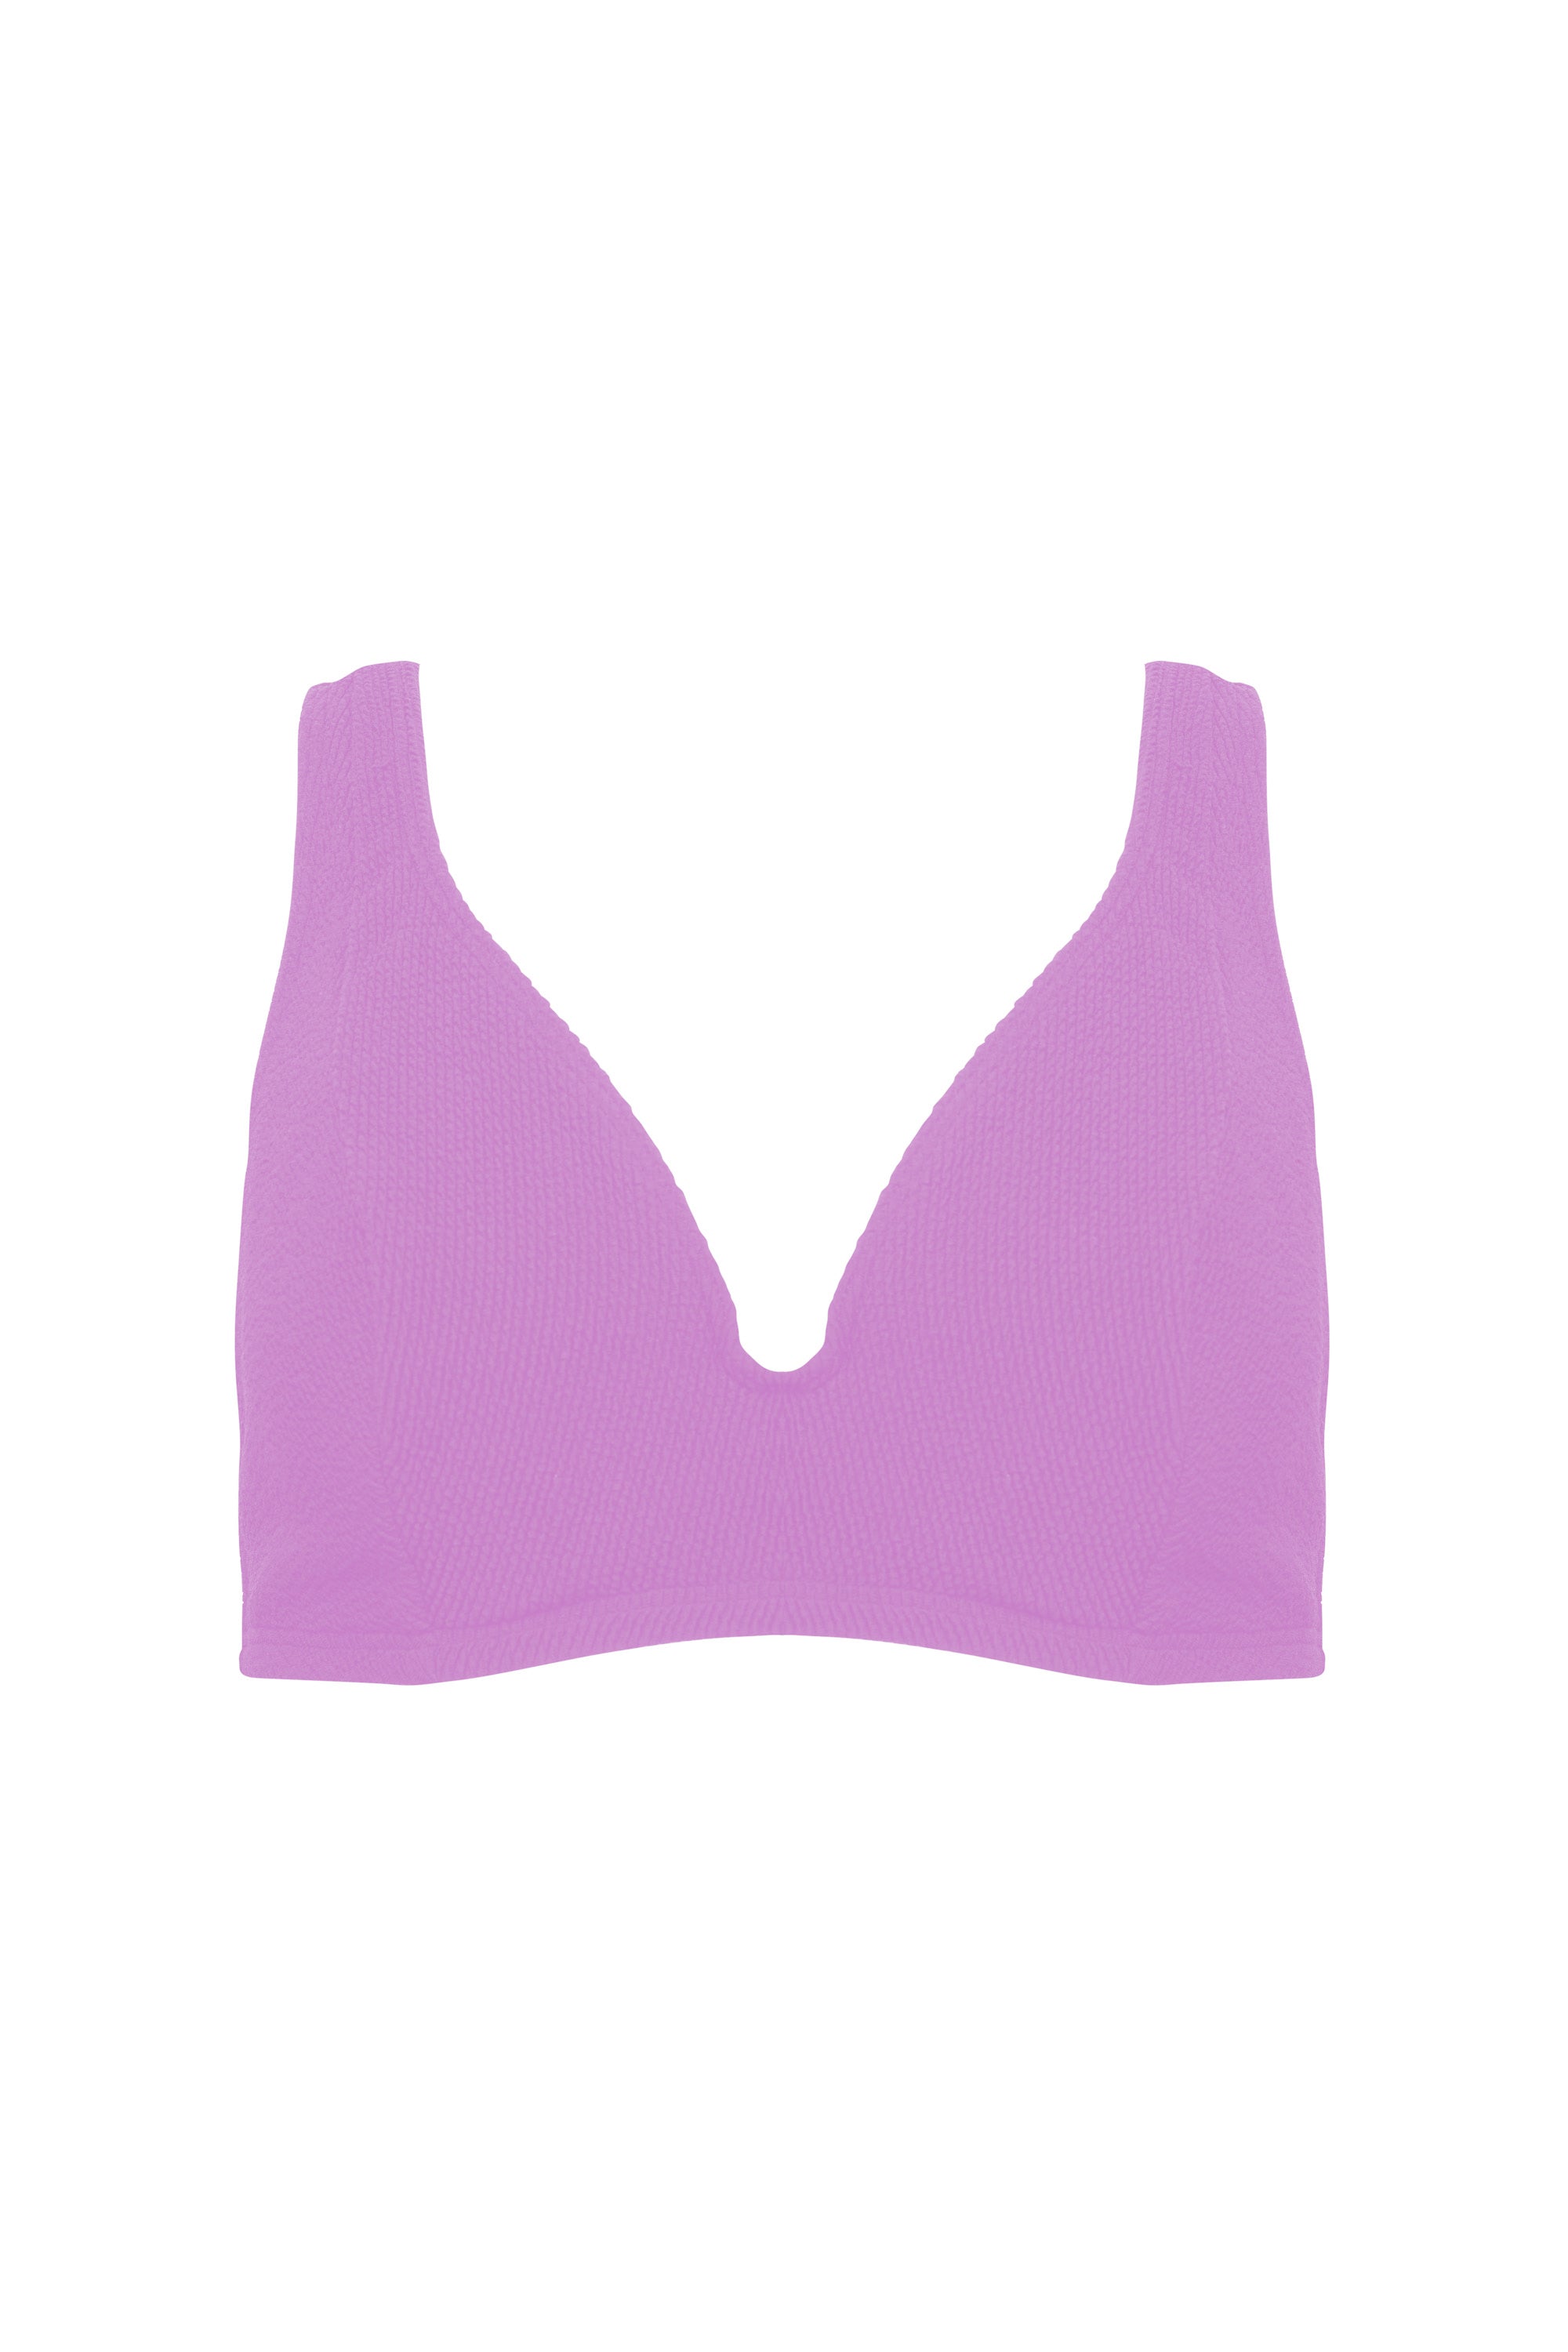 Lilac scrunch fabric hidden underwire bikini top with thick shoulder straps